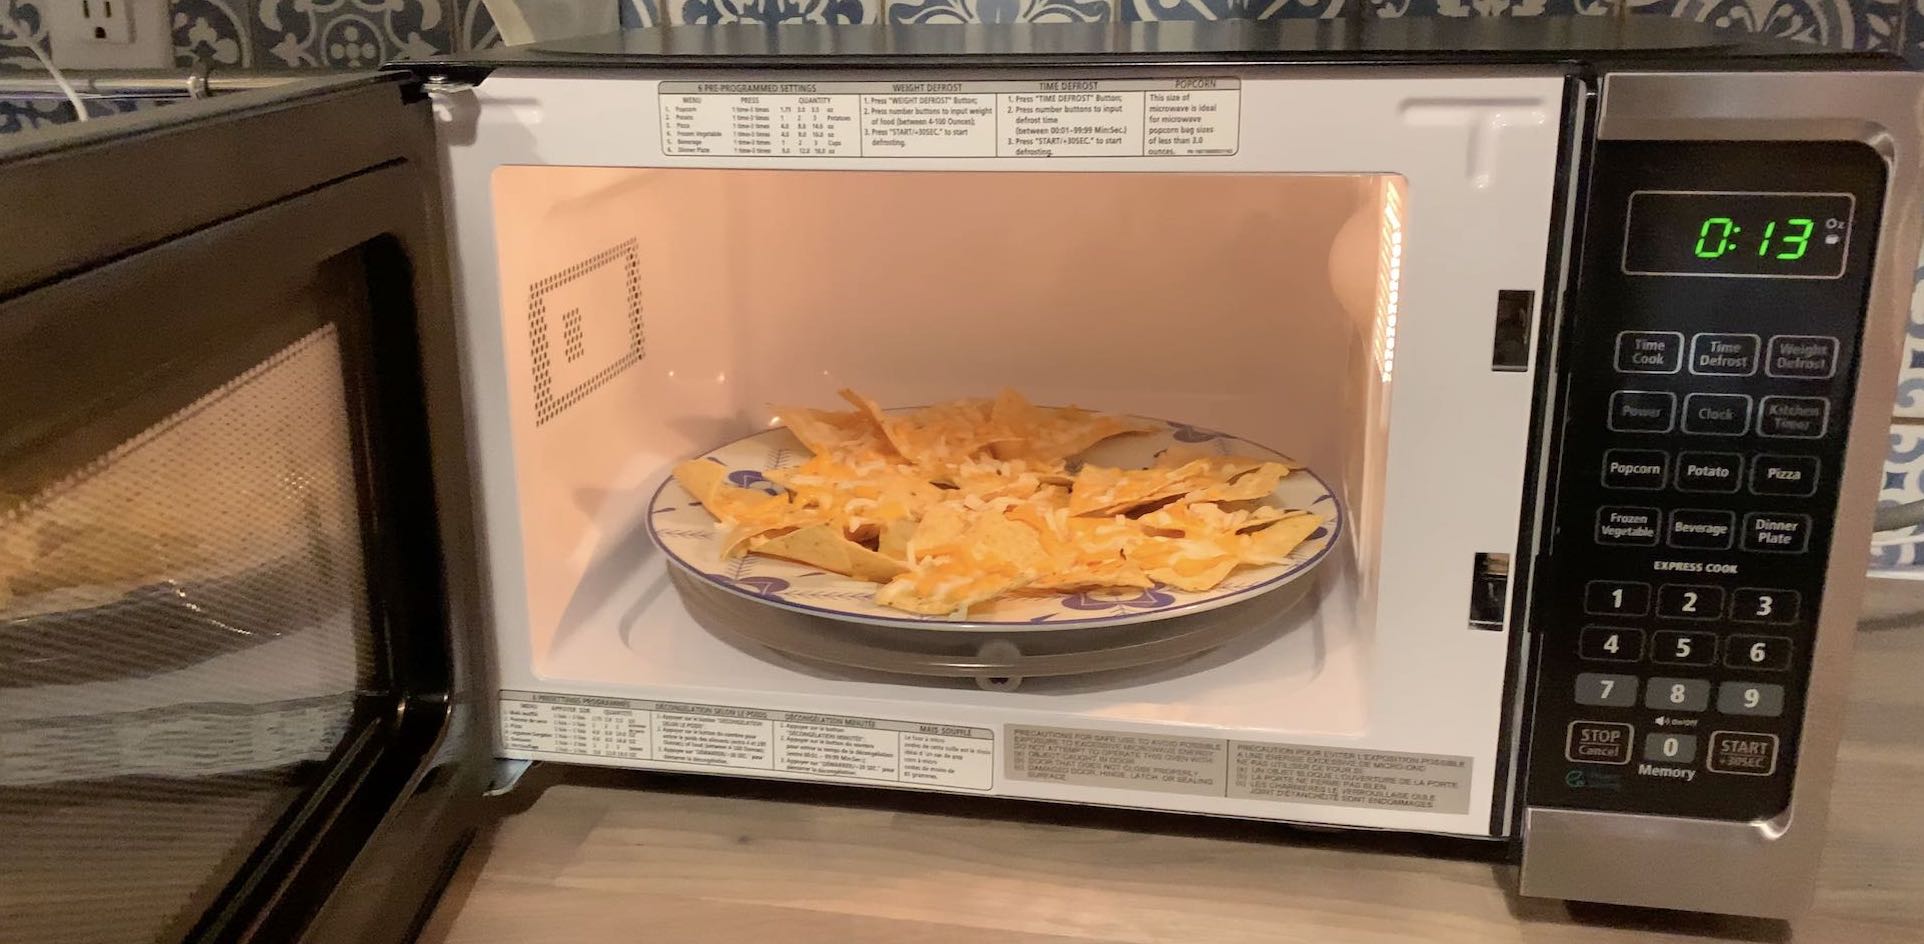 https://blog.bestbuy.ca/wp-content/uploads/2020/08/Dinner-plate-insignia-microwave.jpg